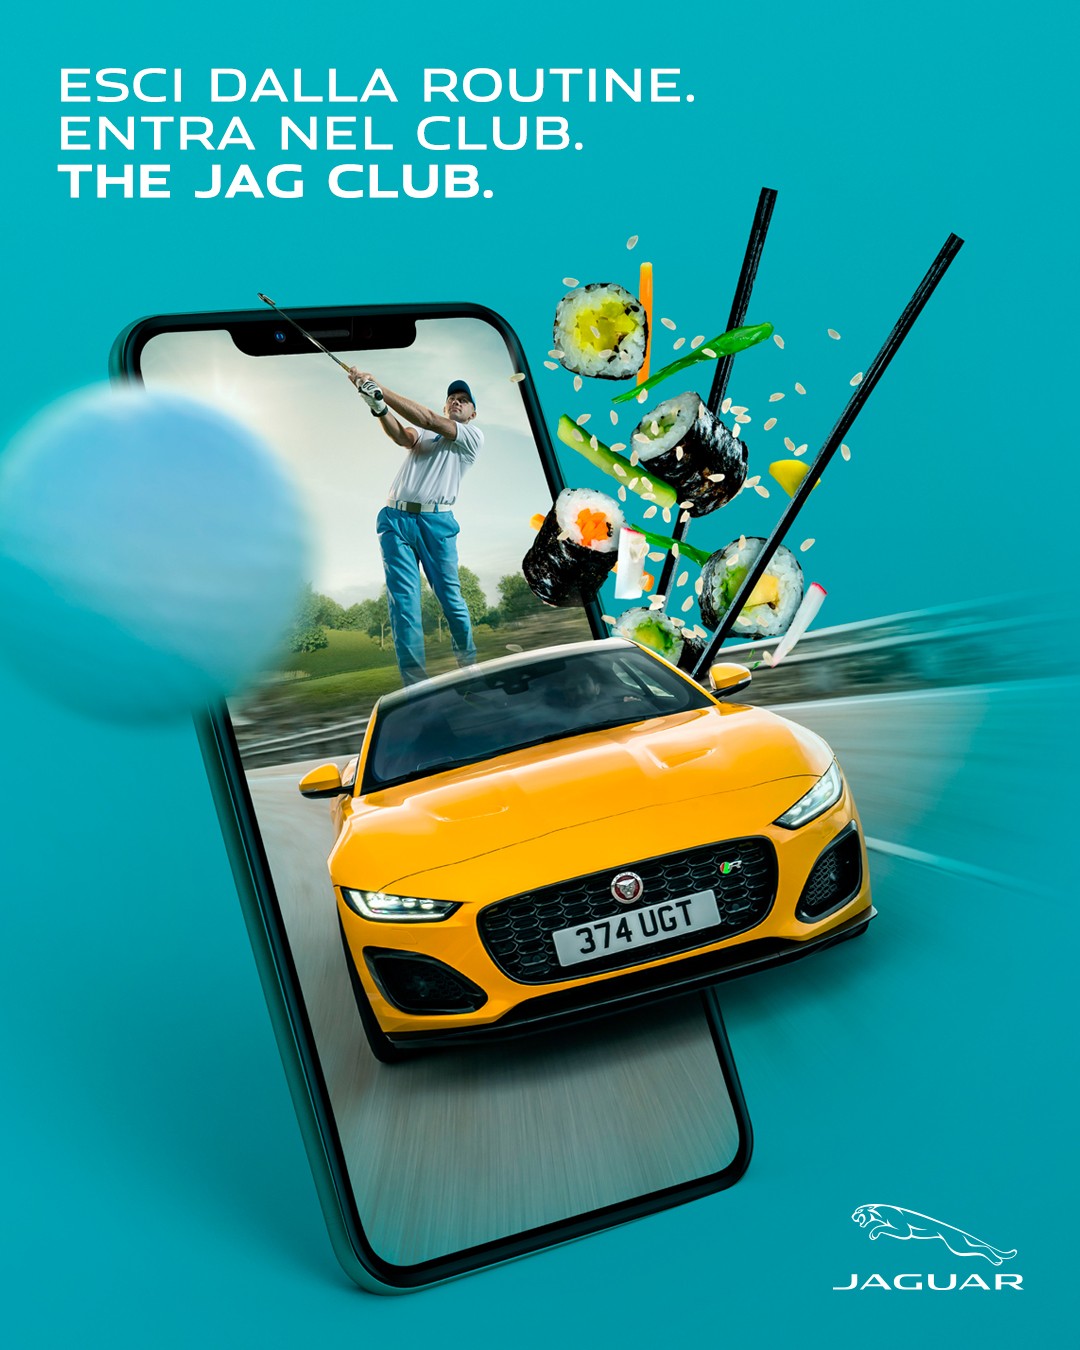 the jag club